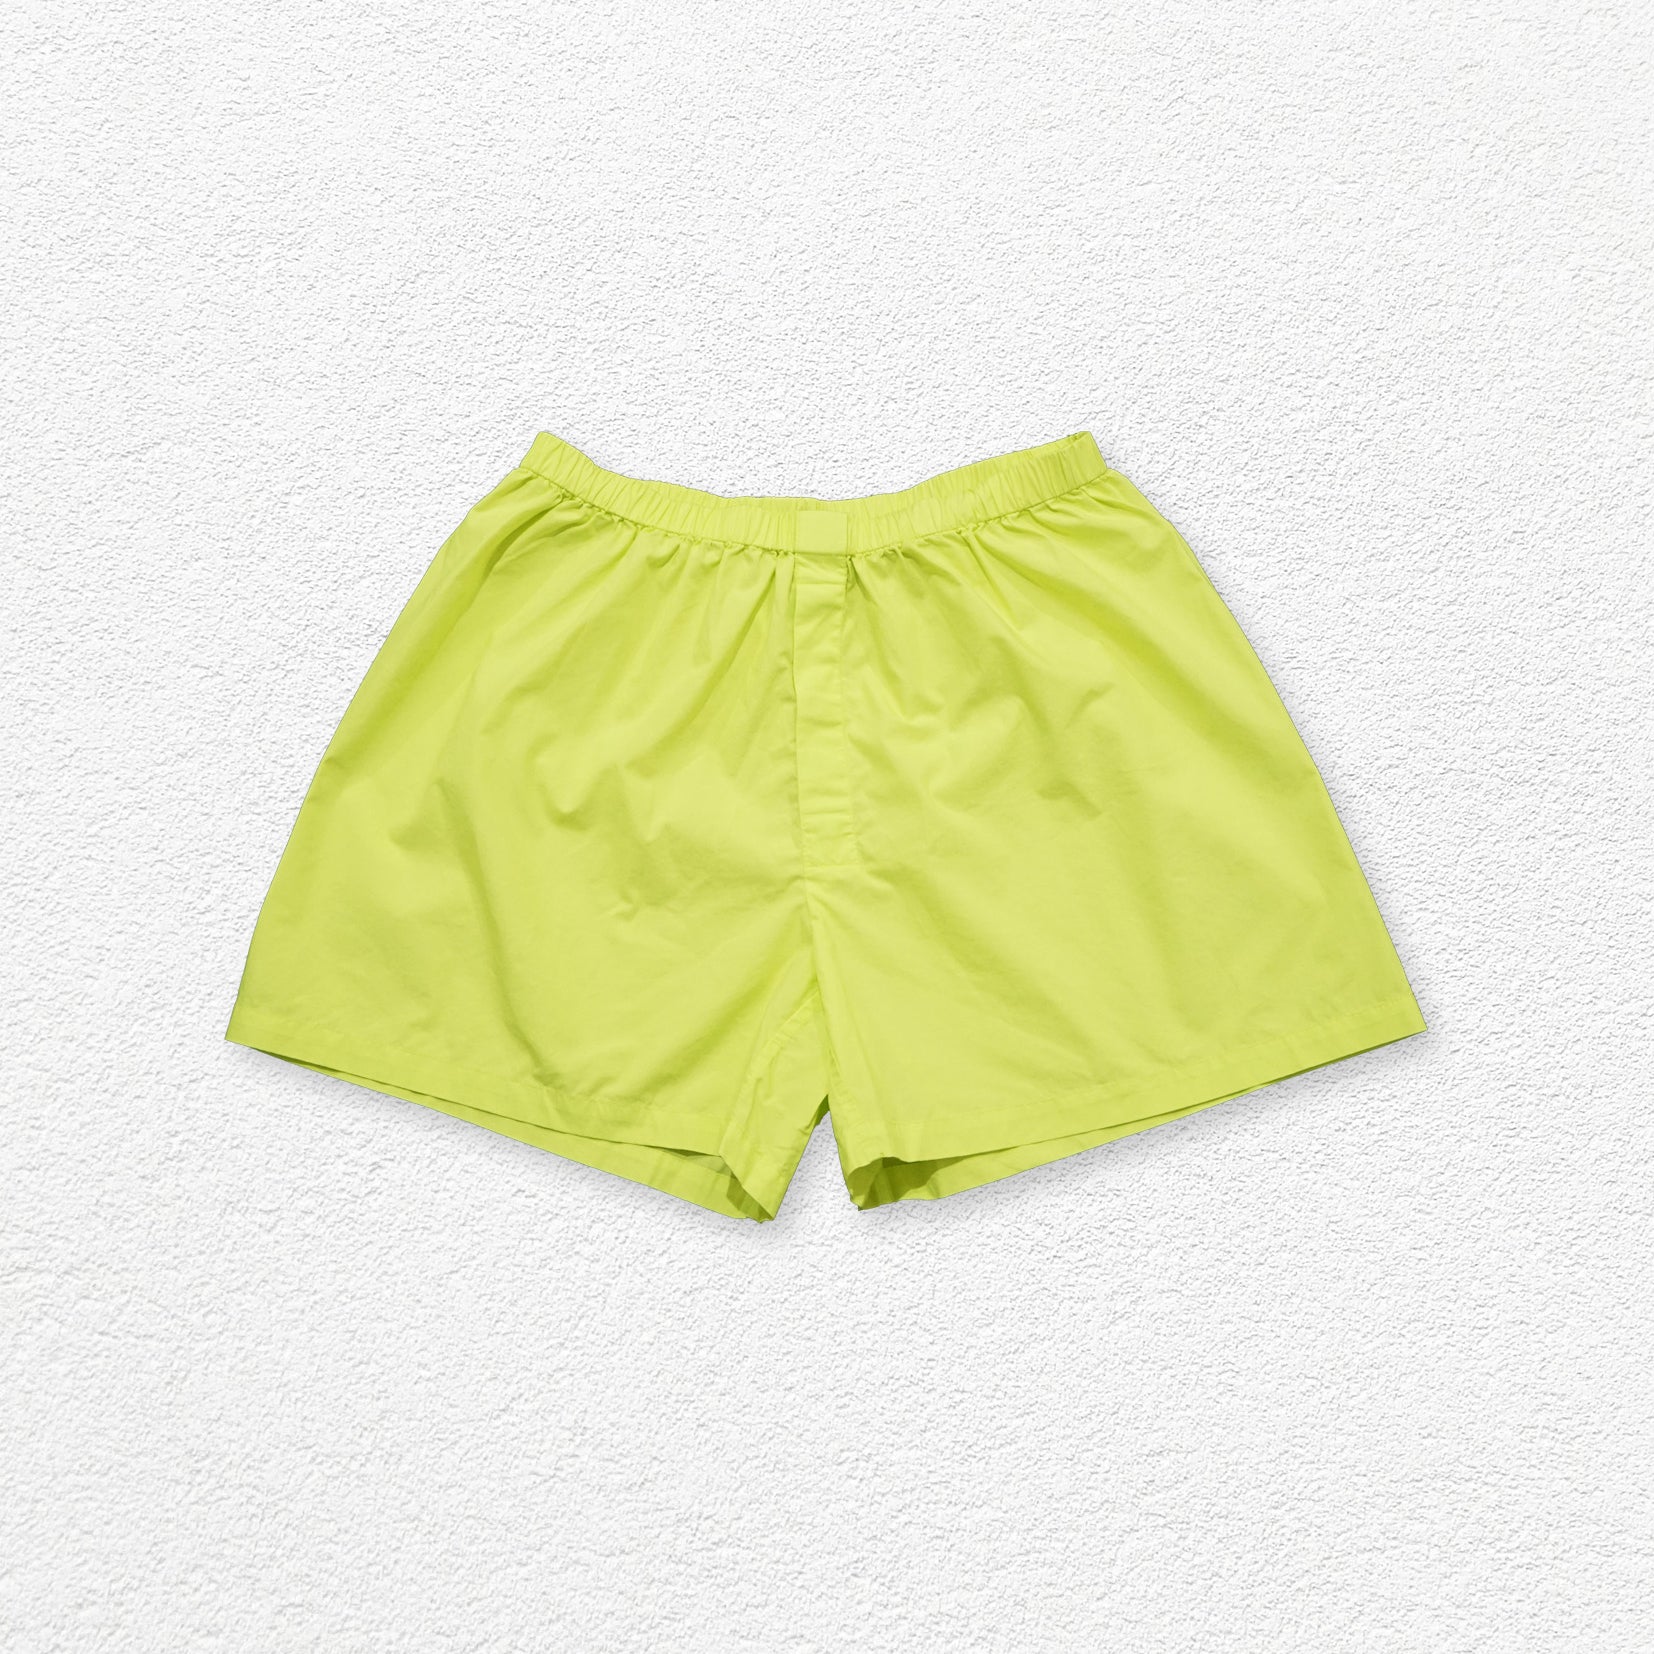 Unisex boxer shorts underwear - lime